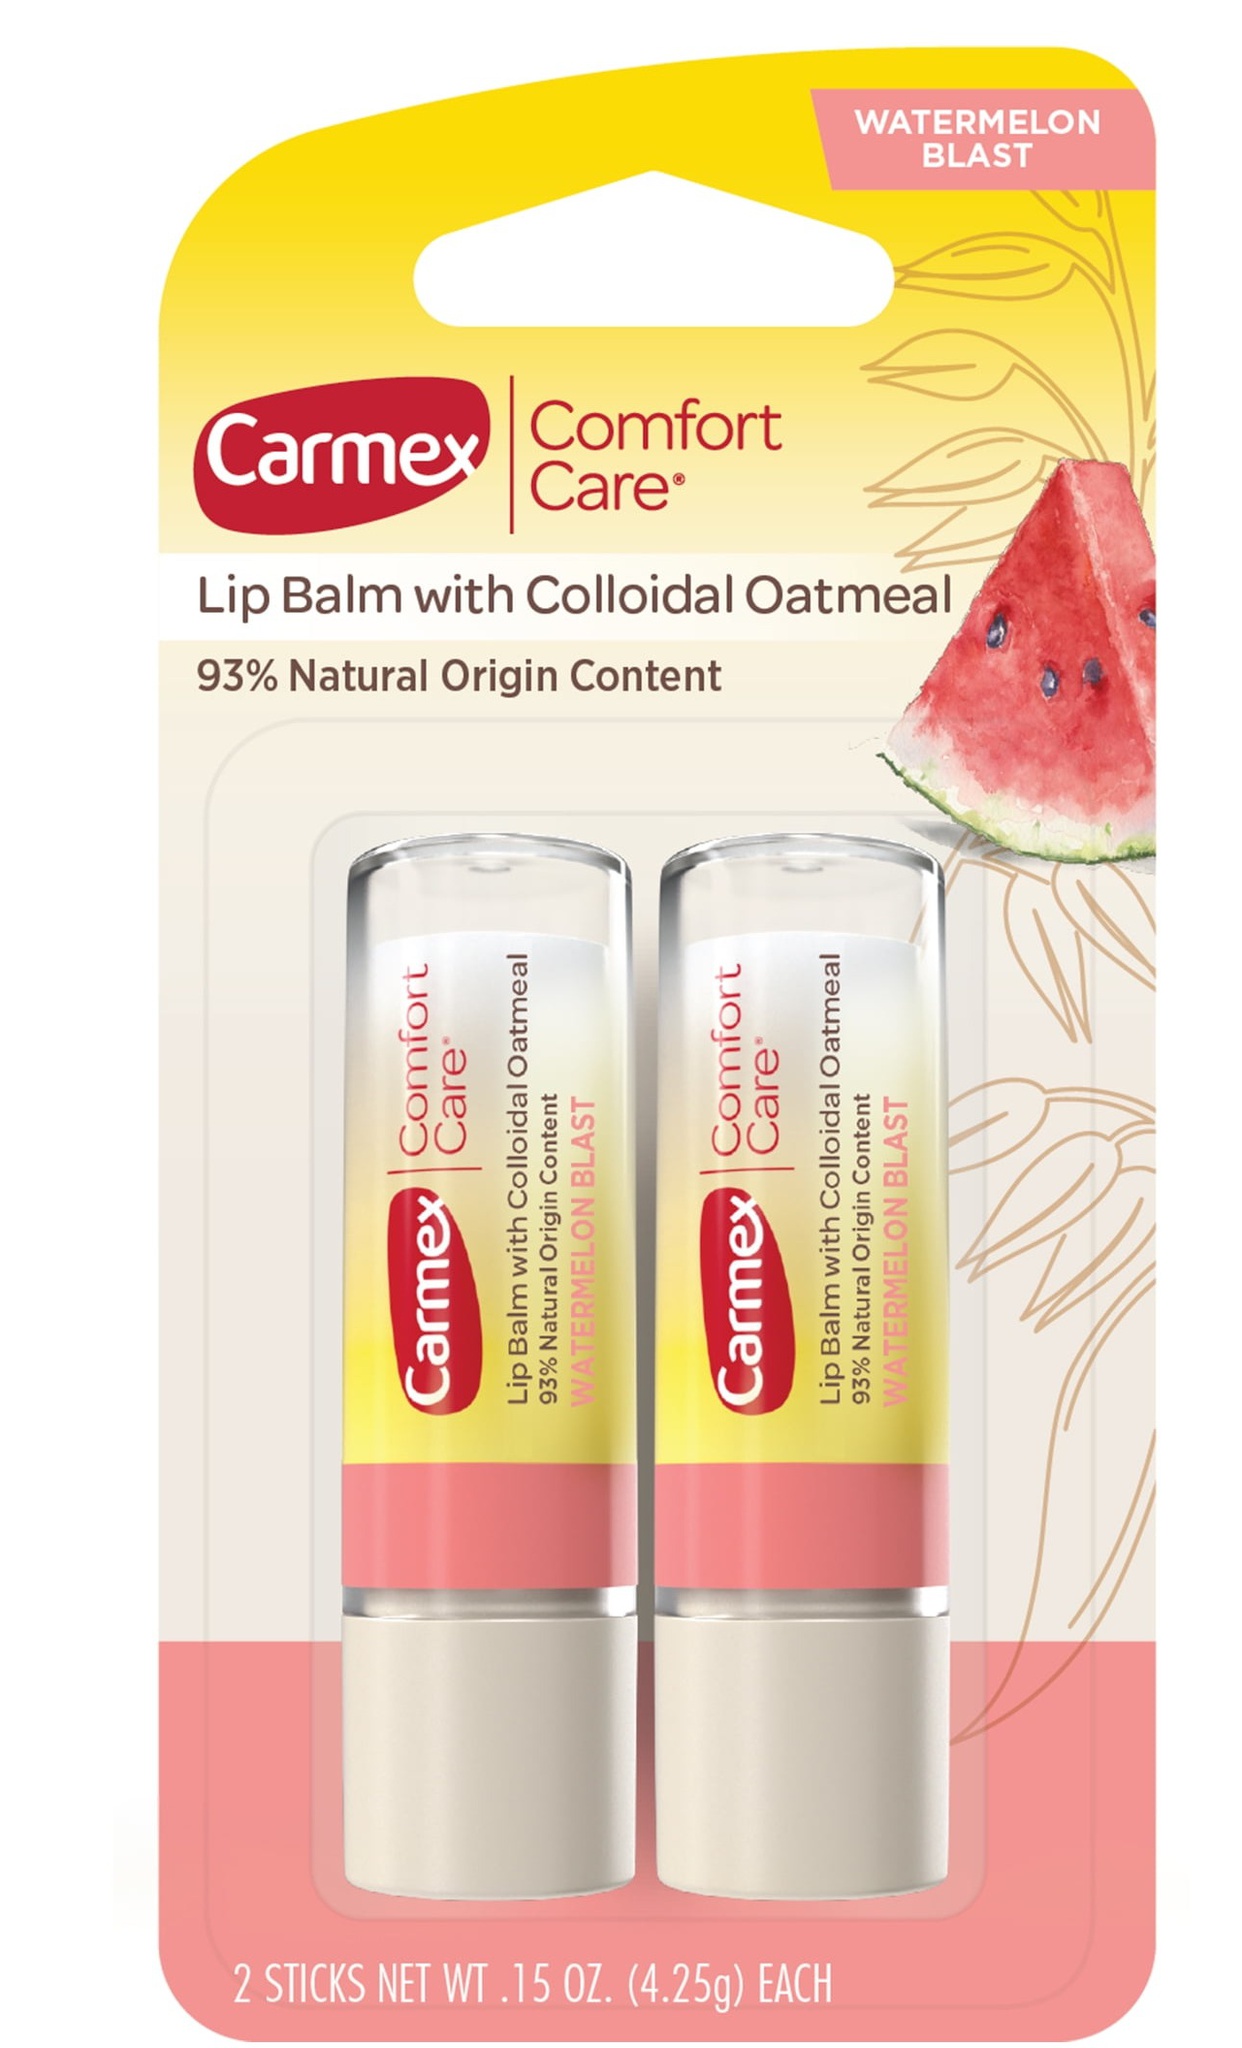 Carmex Comfort Care Lip Balm - Watermelon Blast